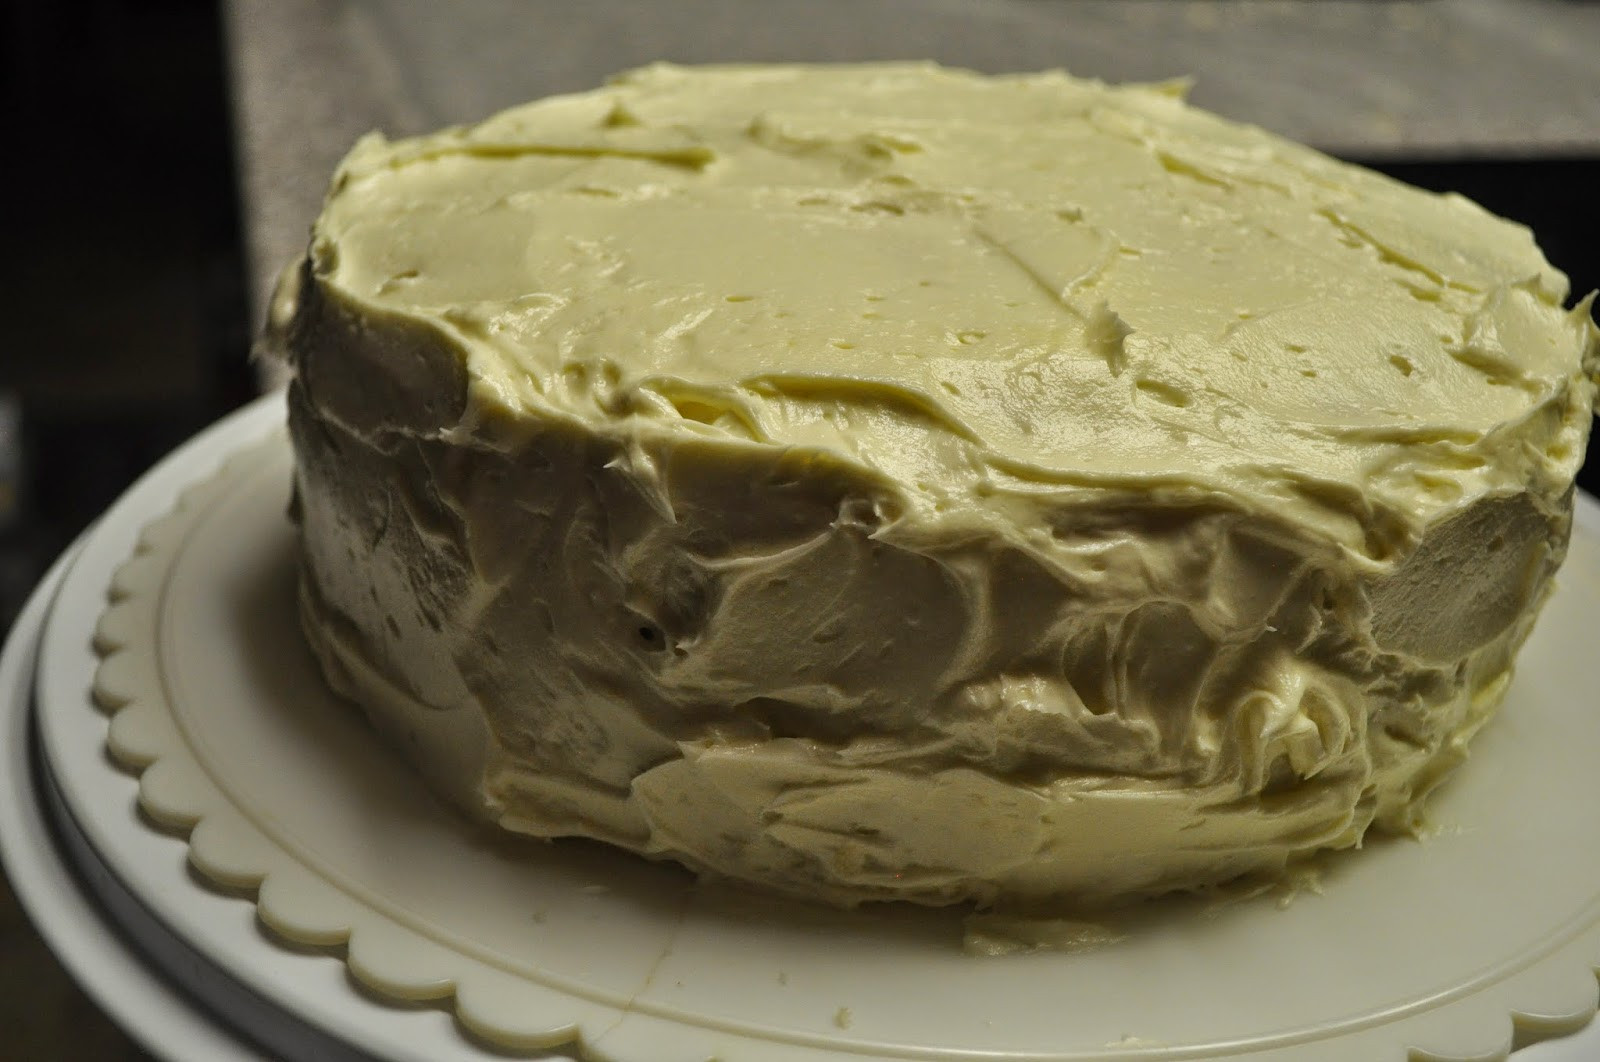 White Almond Wedding Cake Frosting
 Beth s Favorite Recipes White Almond Wedding Cake with